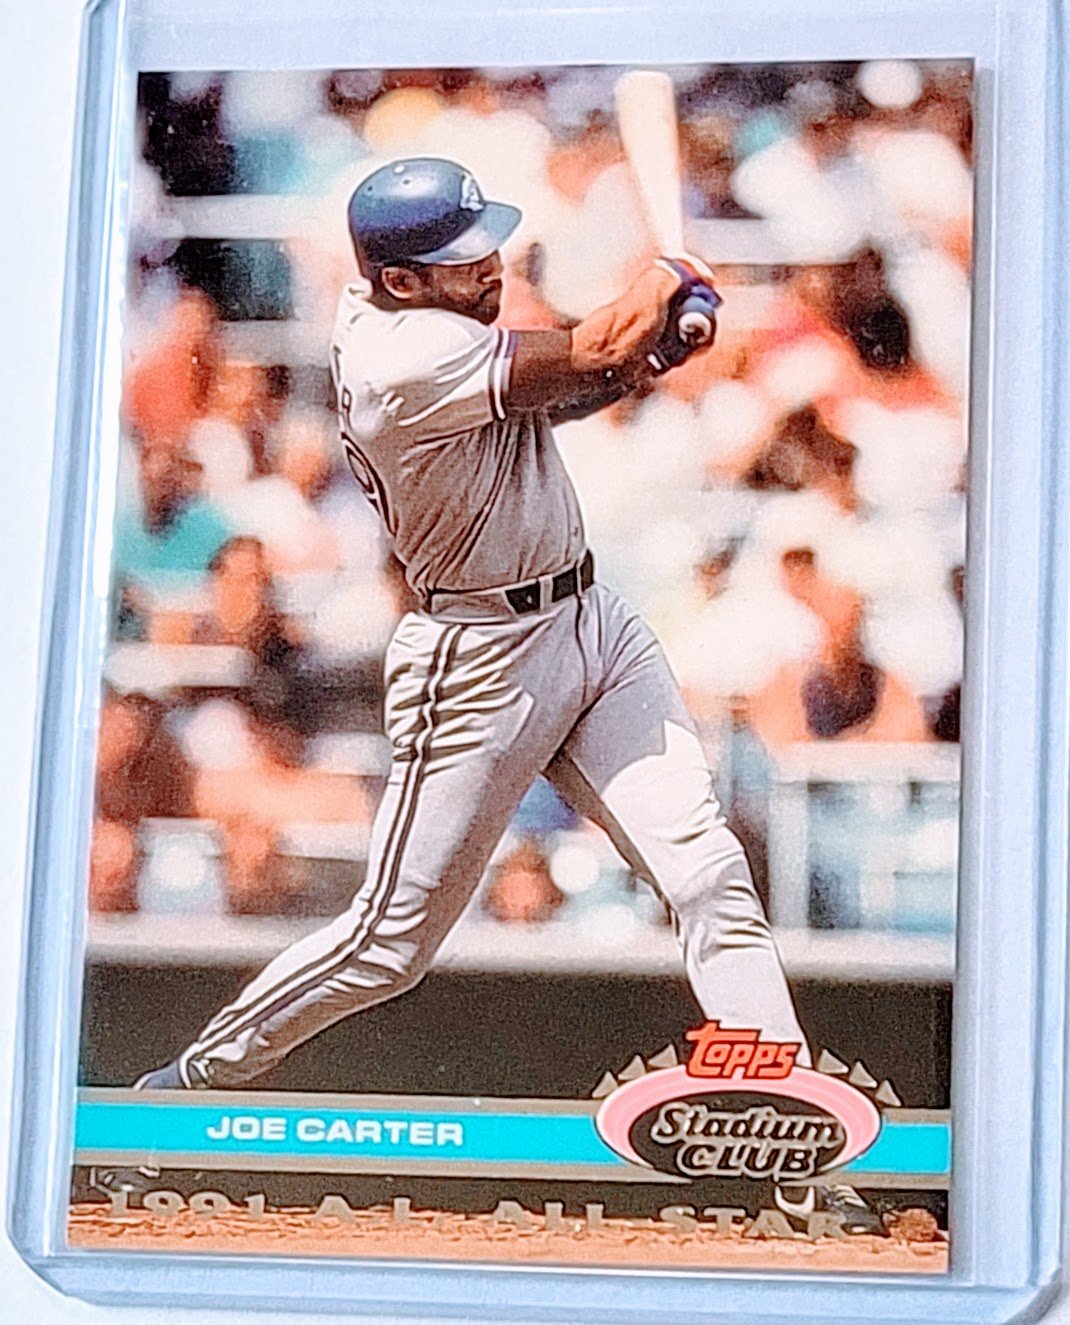 1992 Topps Stadium Club Dome Joe Carter 1991 All Star MLB Baseball Trading Card TPTV simple Xclusive Collectibles   